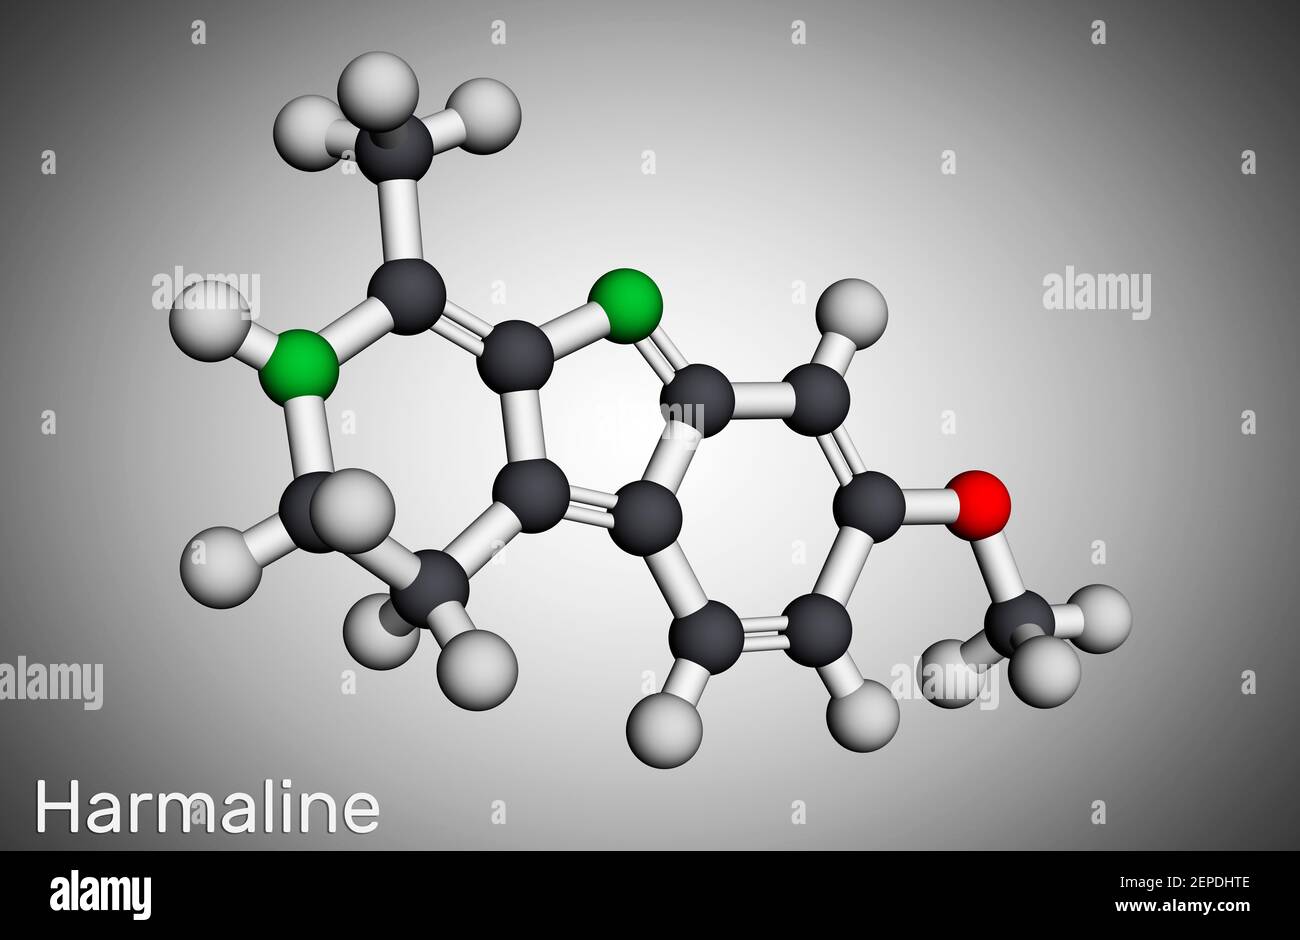 Harmaline molecule. It is fluorescent indole alkaloid. Molecular model. 3D rendering. 3D illustration Stock Photo